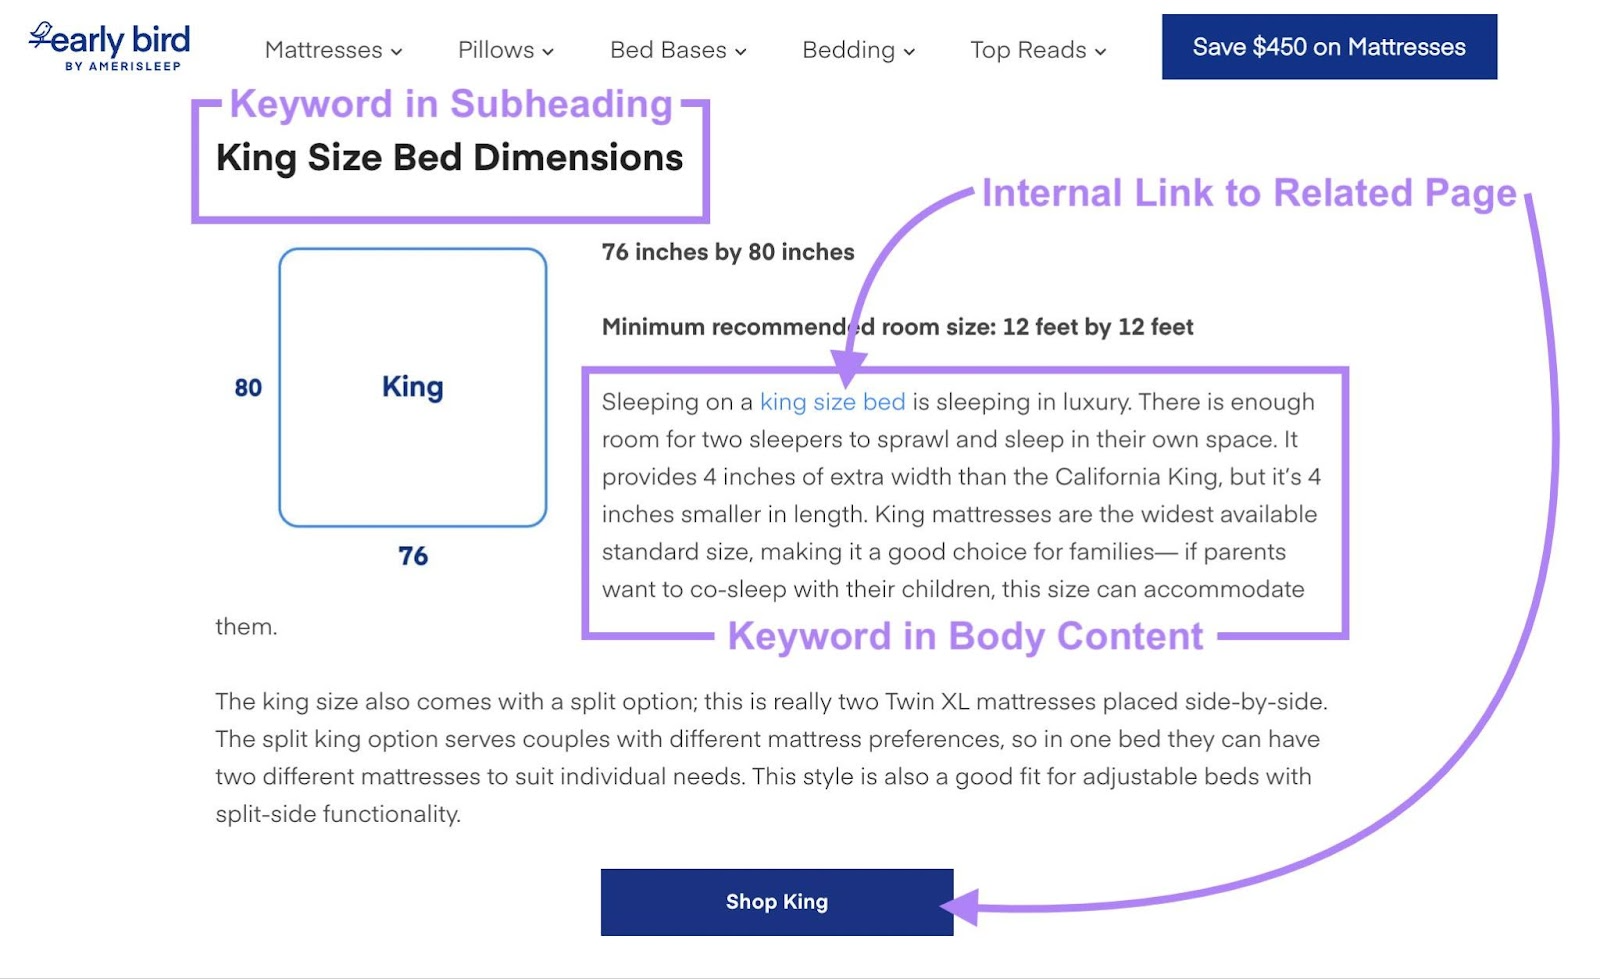 Amerisleep uses relevant keywords and internal links